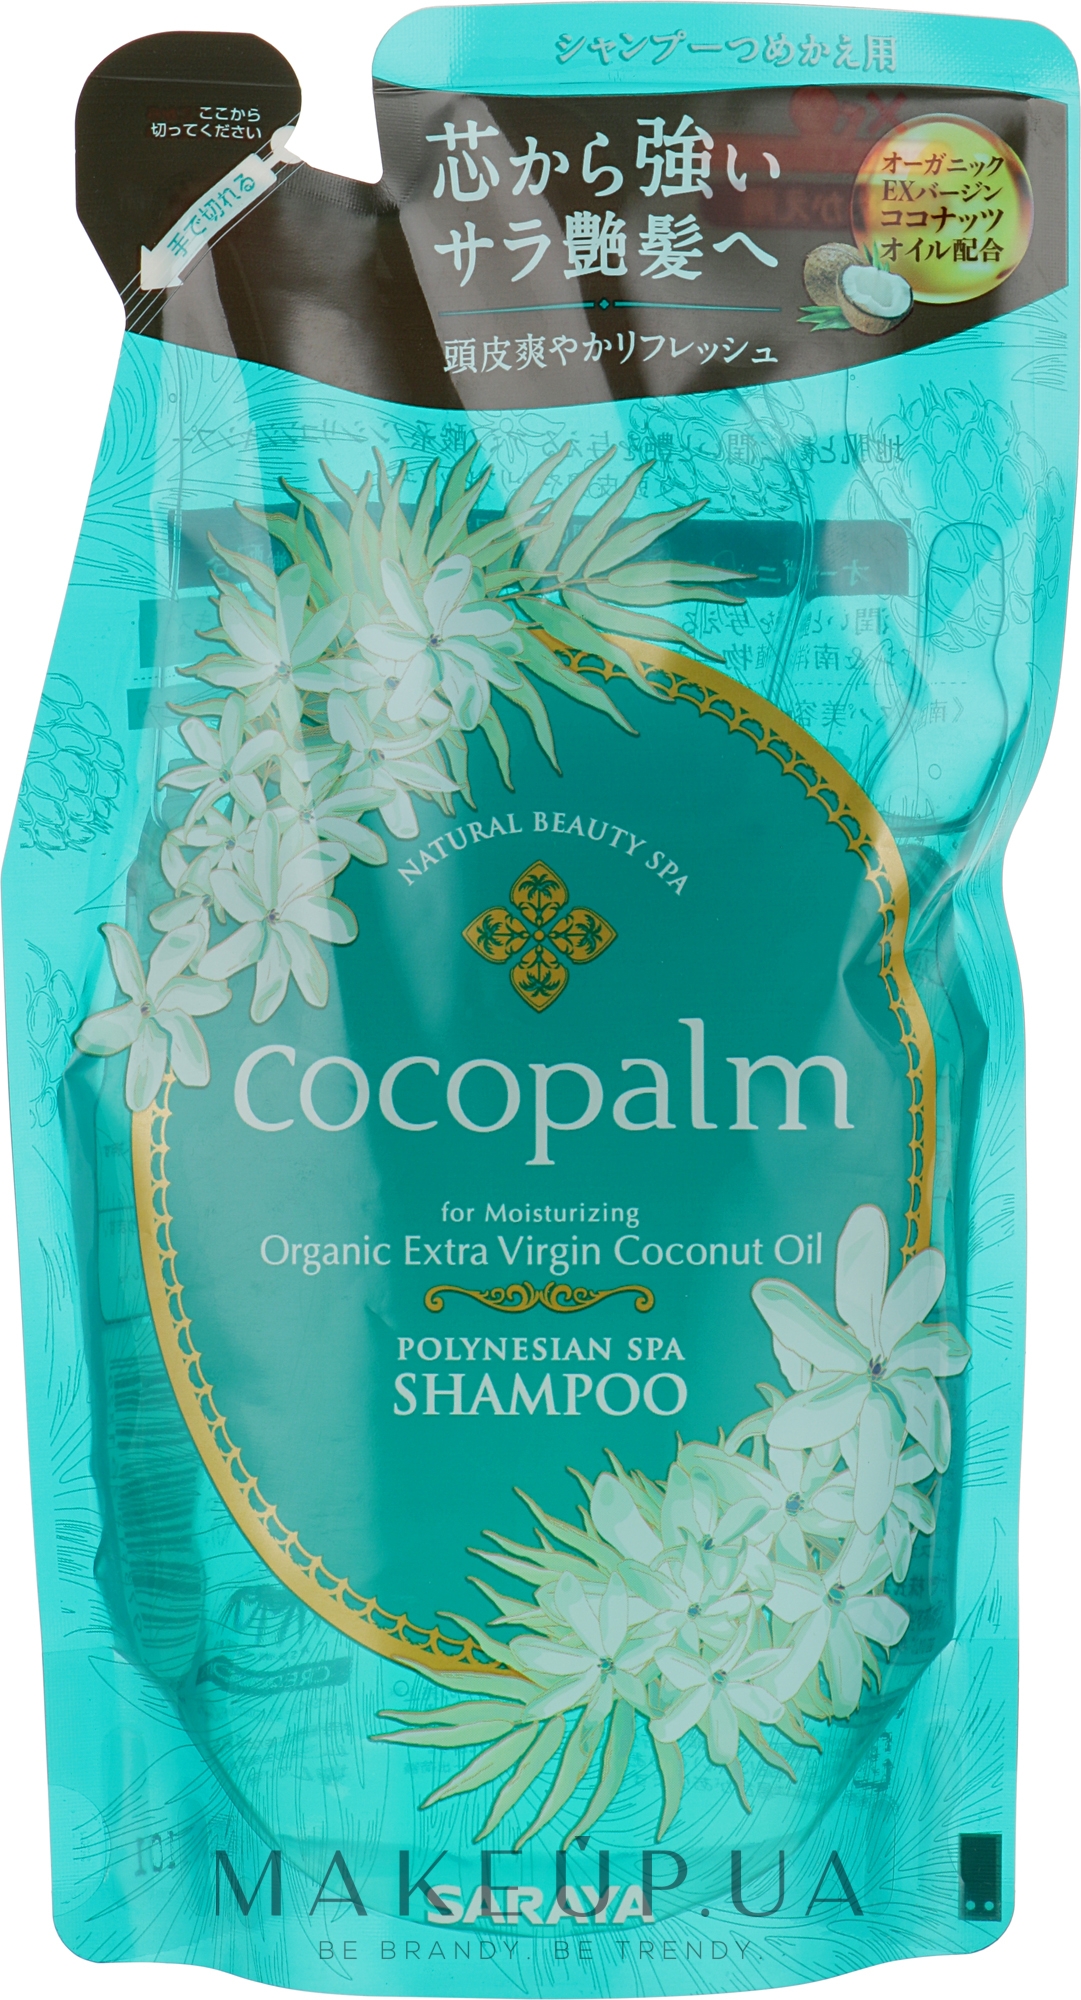 СПА-шампунь для волос - Cocopalm Natural Beauty SPA Polynesian SPA Shampoo (сменный блок) — фото 380ml